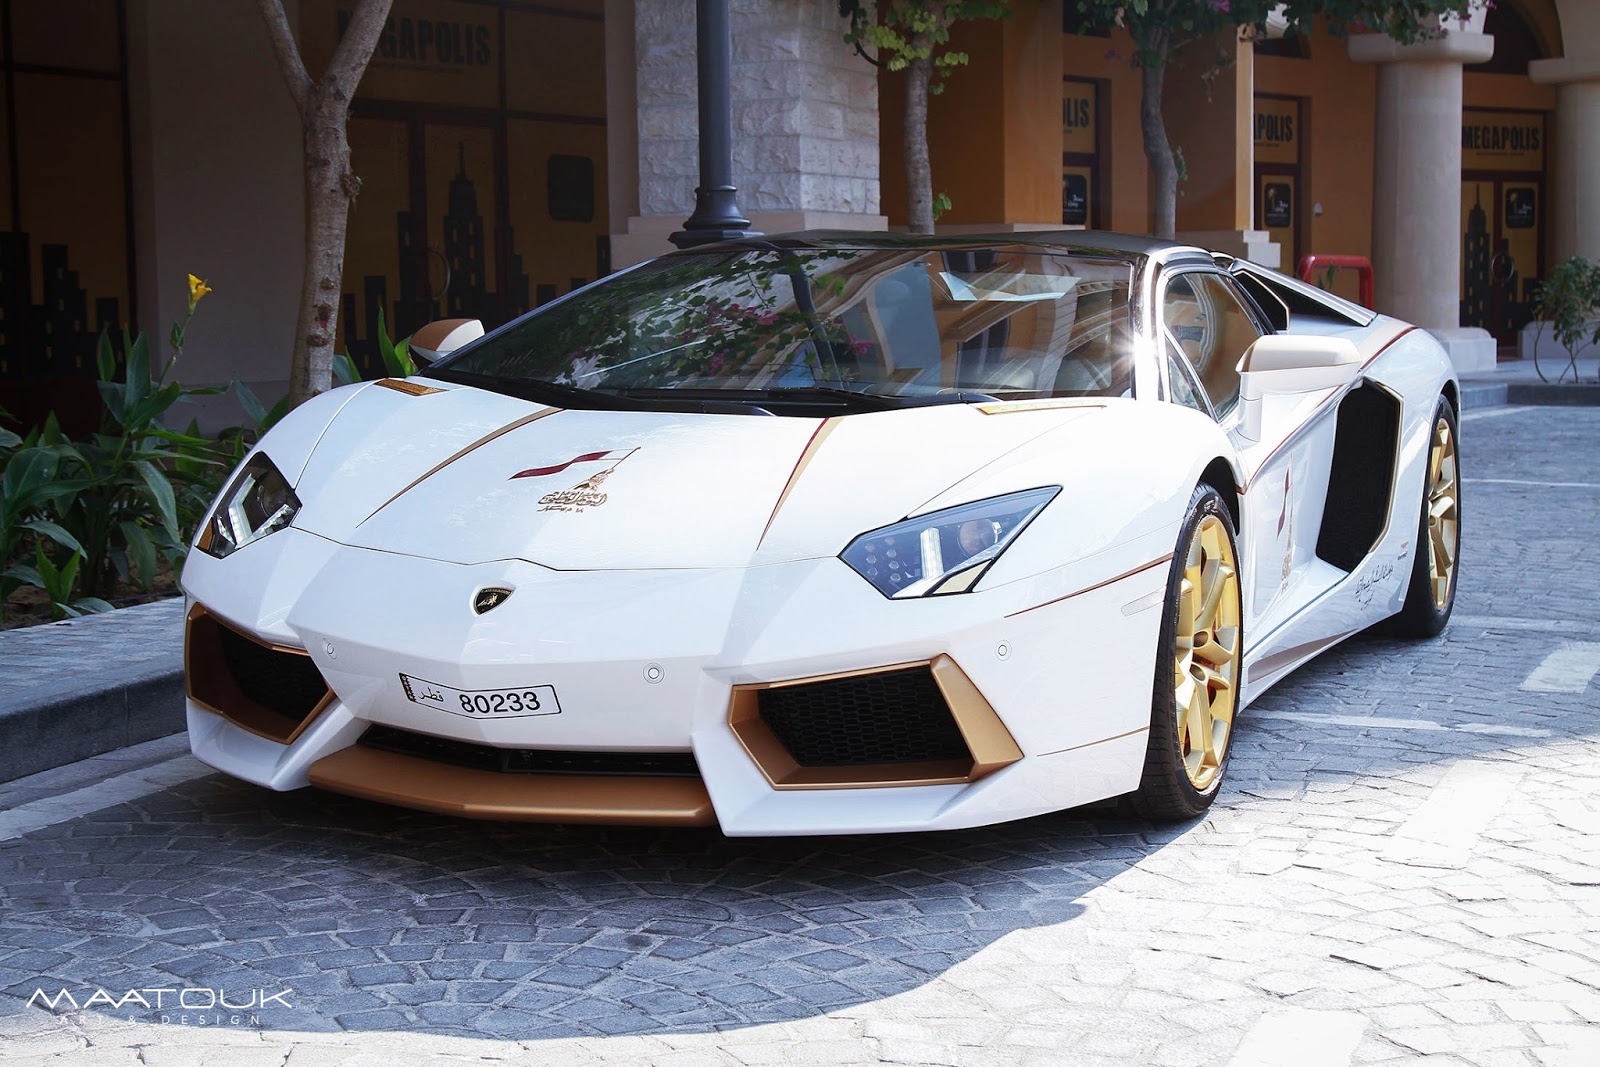 Meet the oneoff gold plated Lamborghini Aventador Roadster Qatar 